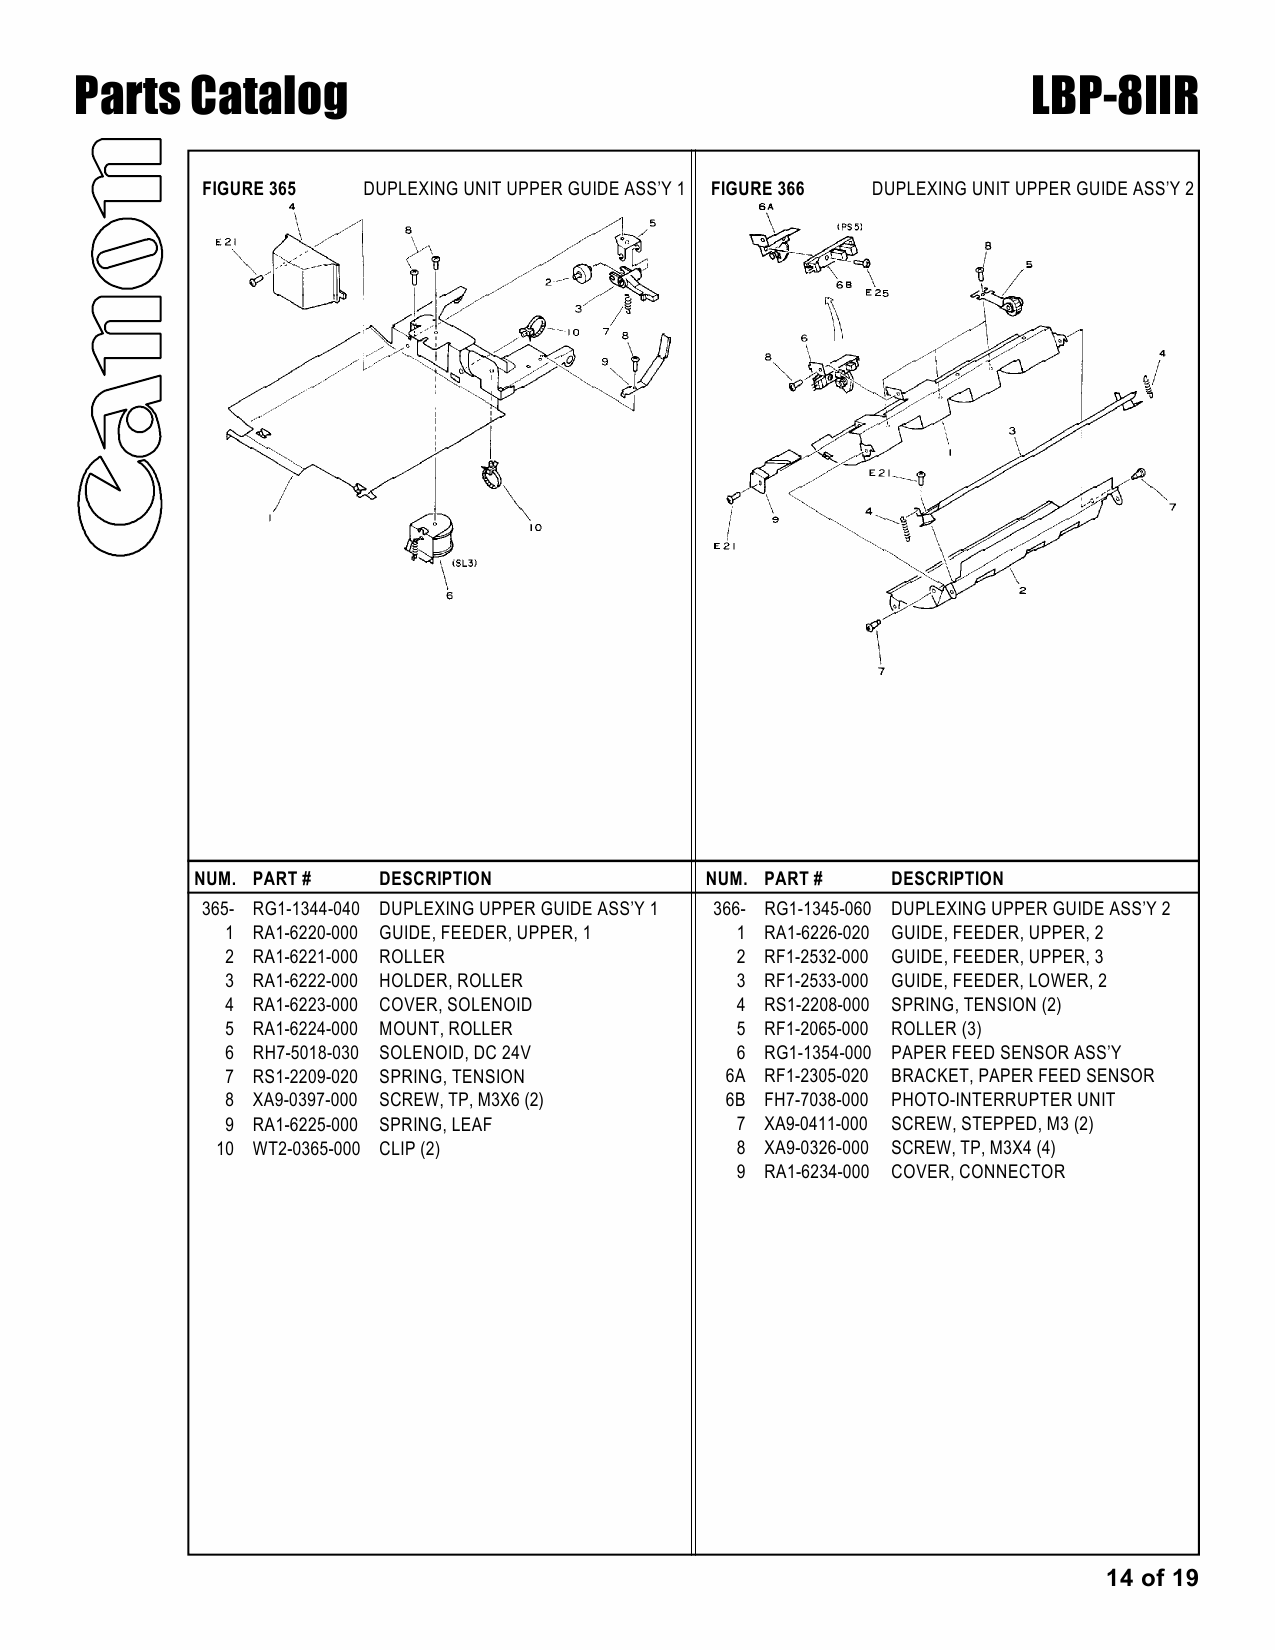 Canon imageCLASS LBP-8IIR Parts Catalog Manual